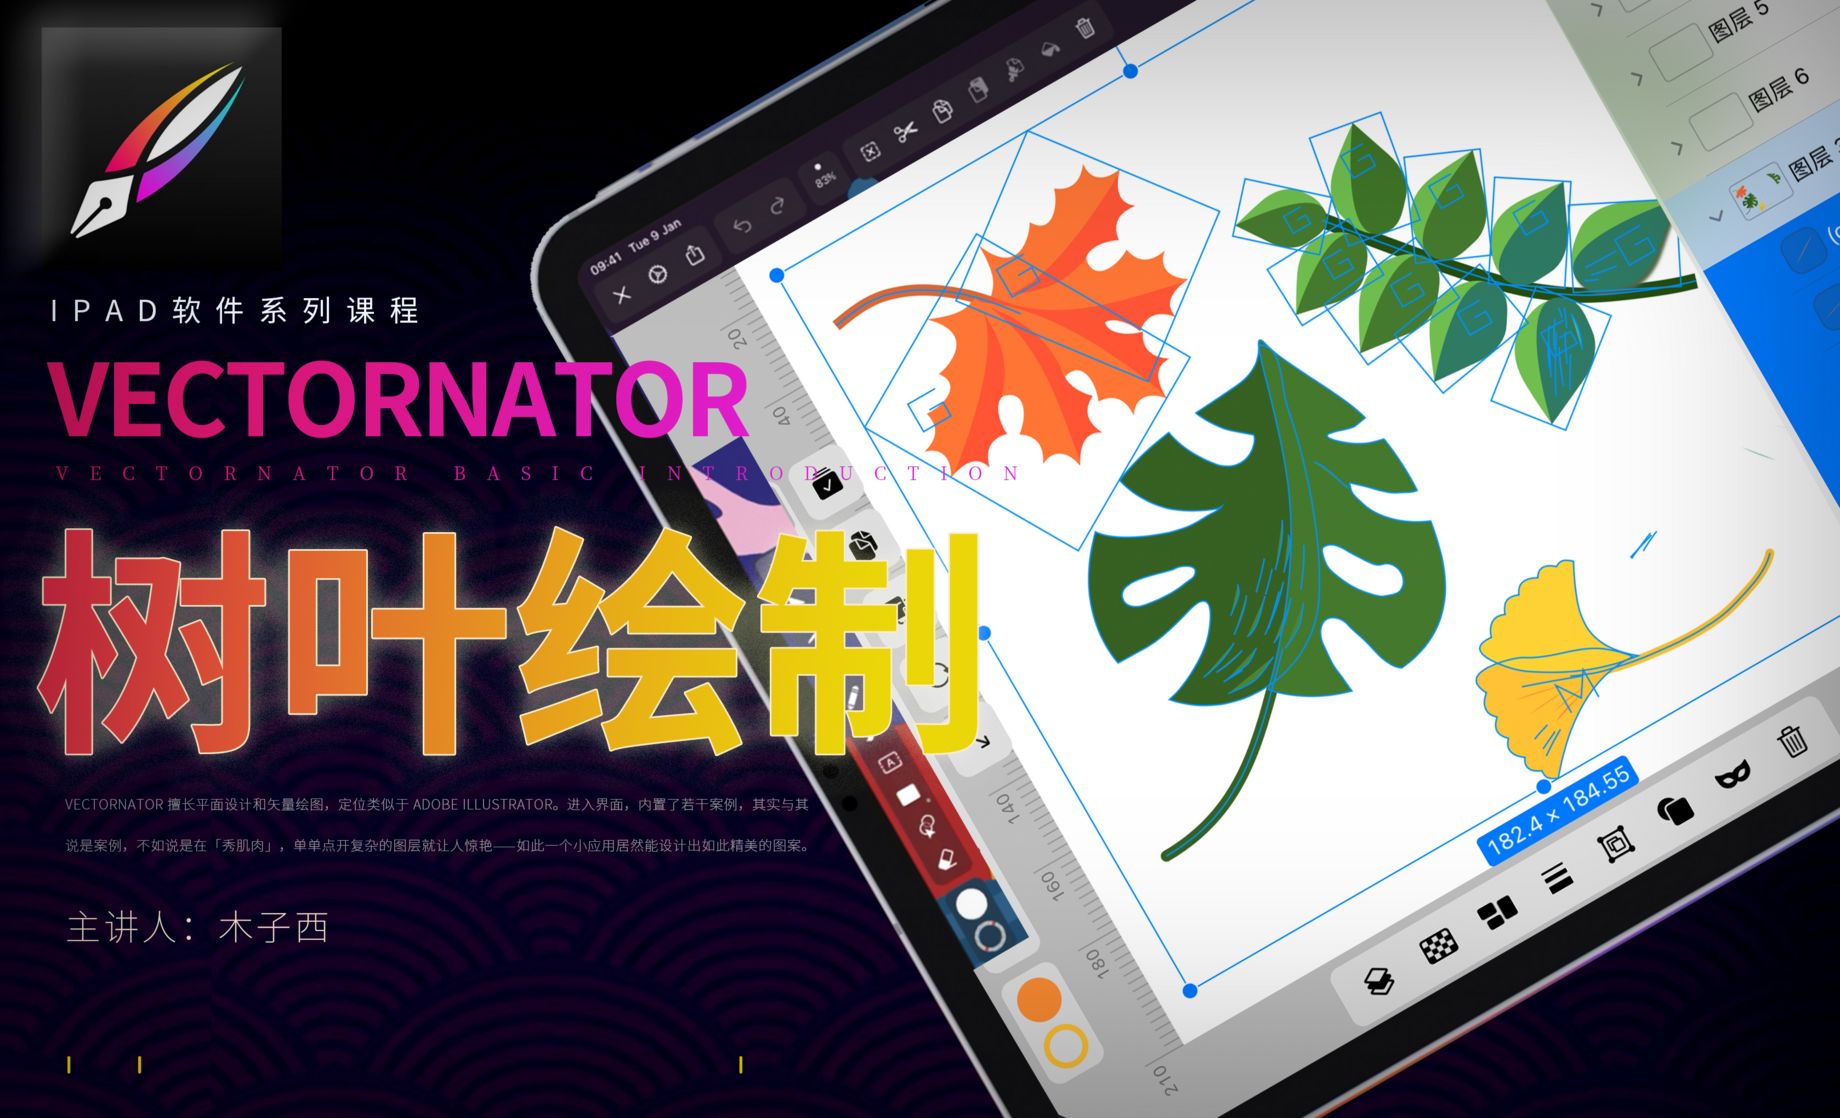 iPad Vectornator软件基础-树叶的绘制